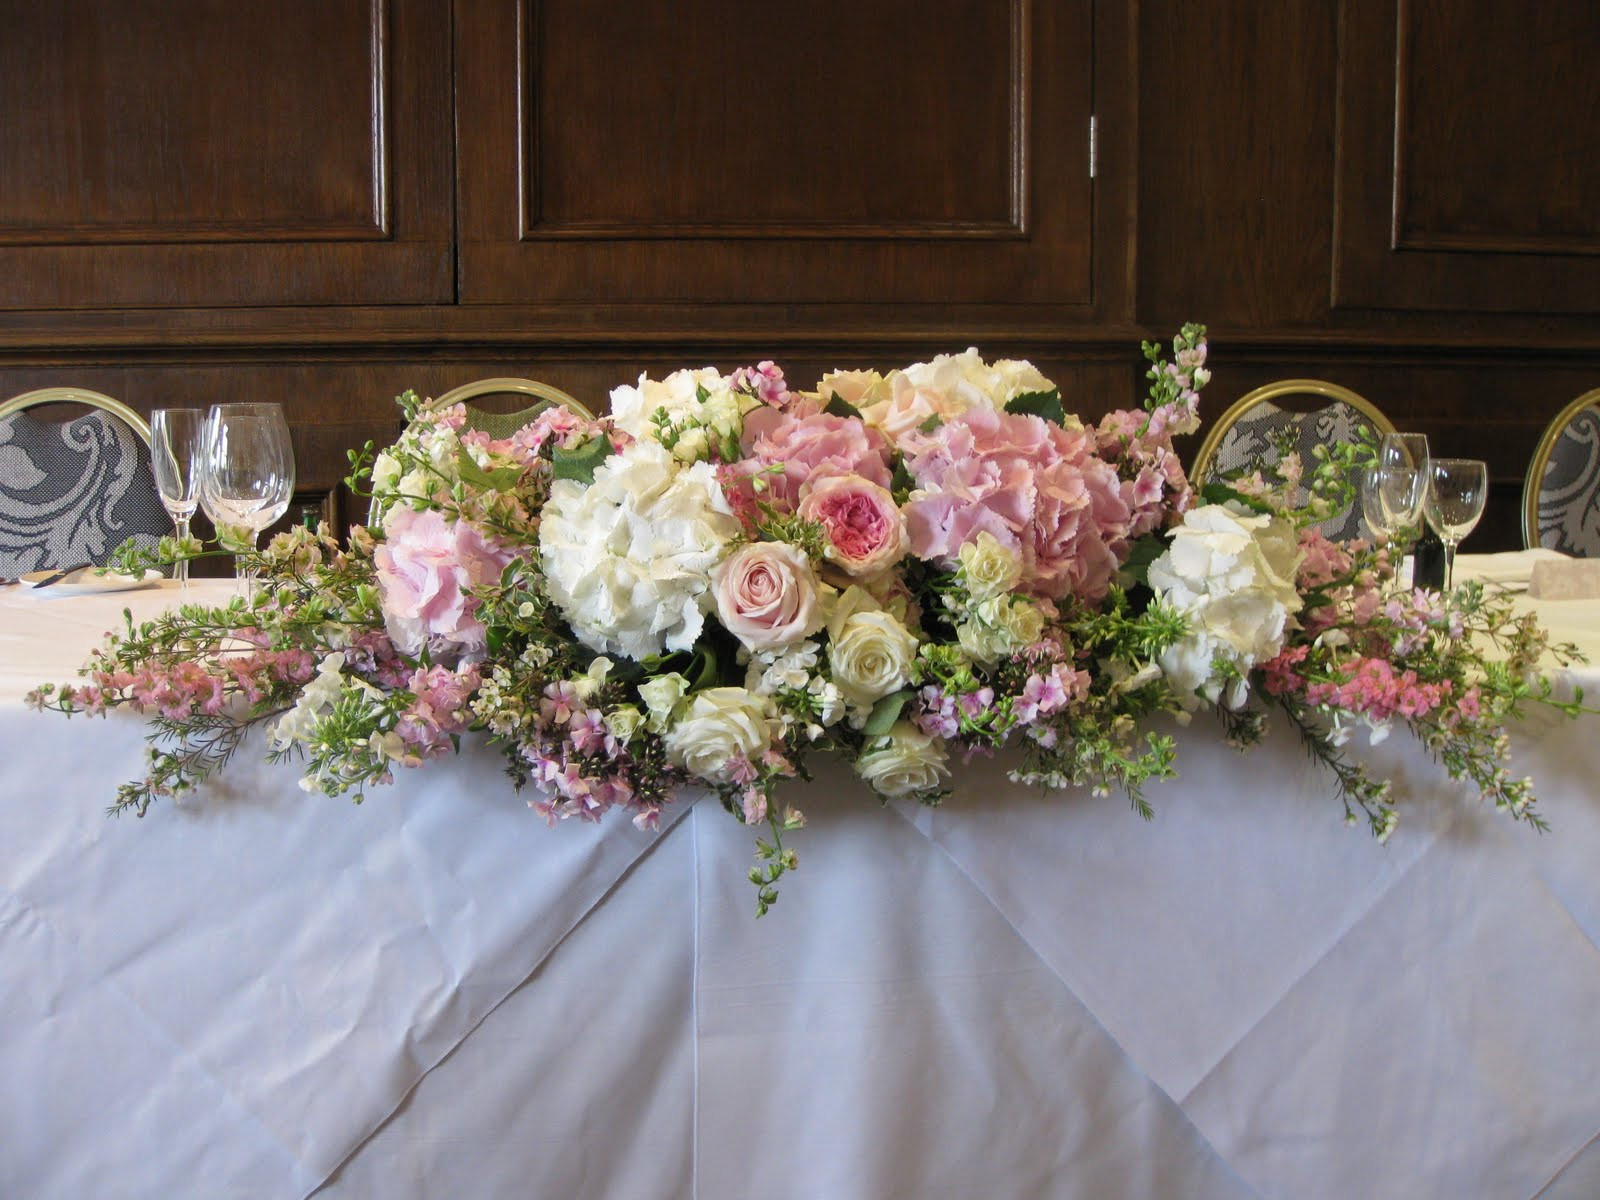 Wedding Table Flower Arrangements
 Wedding Table Flower Arrangements Wedding Flower Table